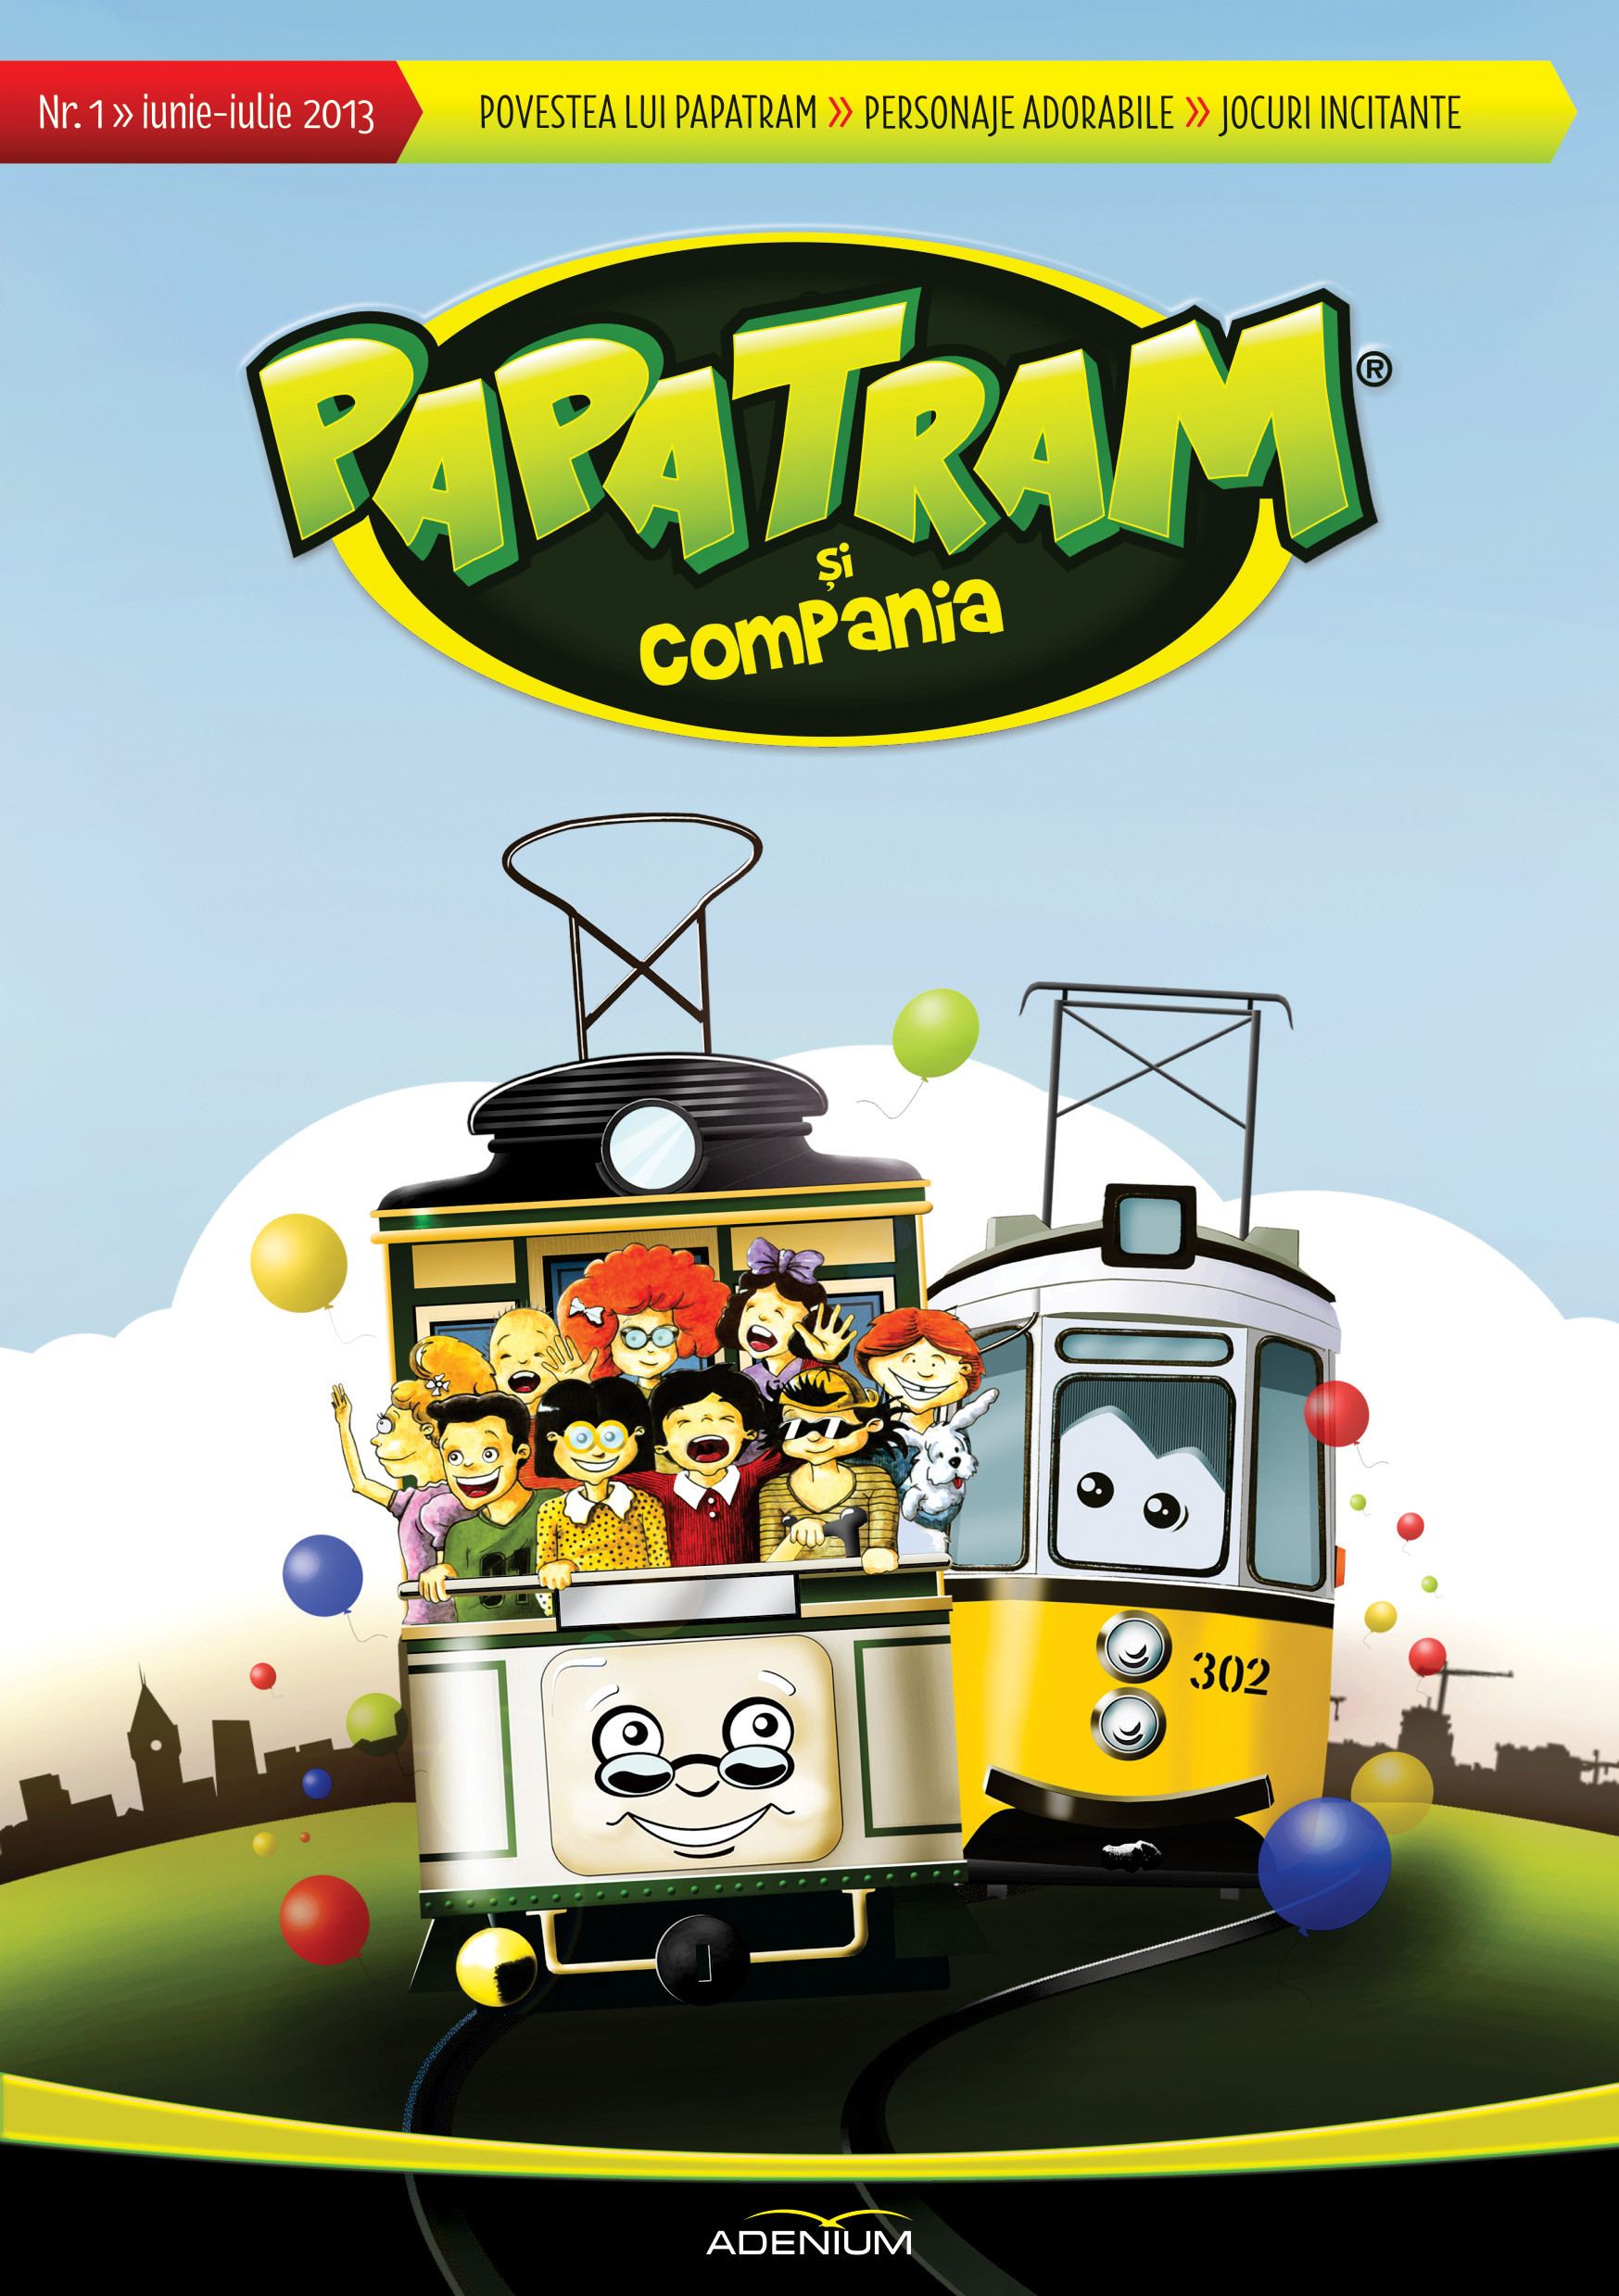 Papatram si compania (nr.1 iunie-Iulie 2013)